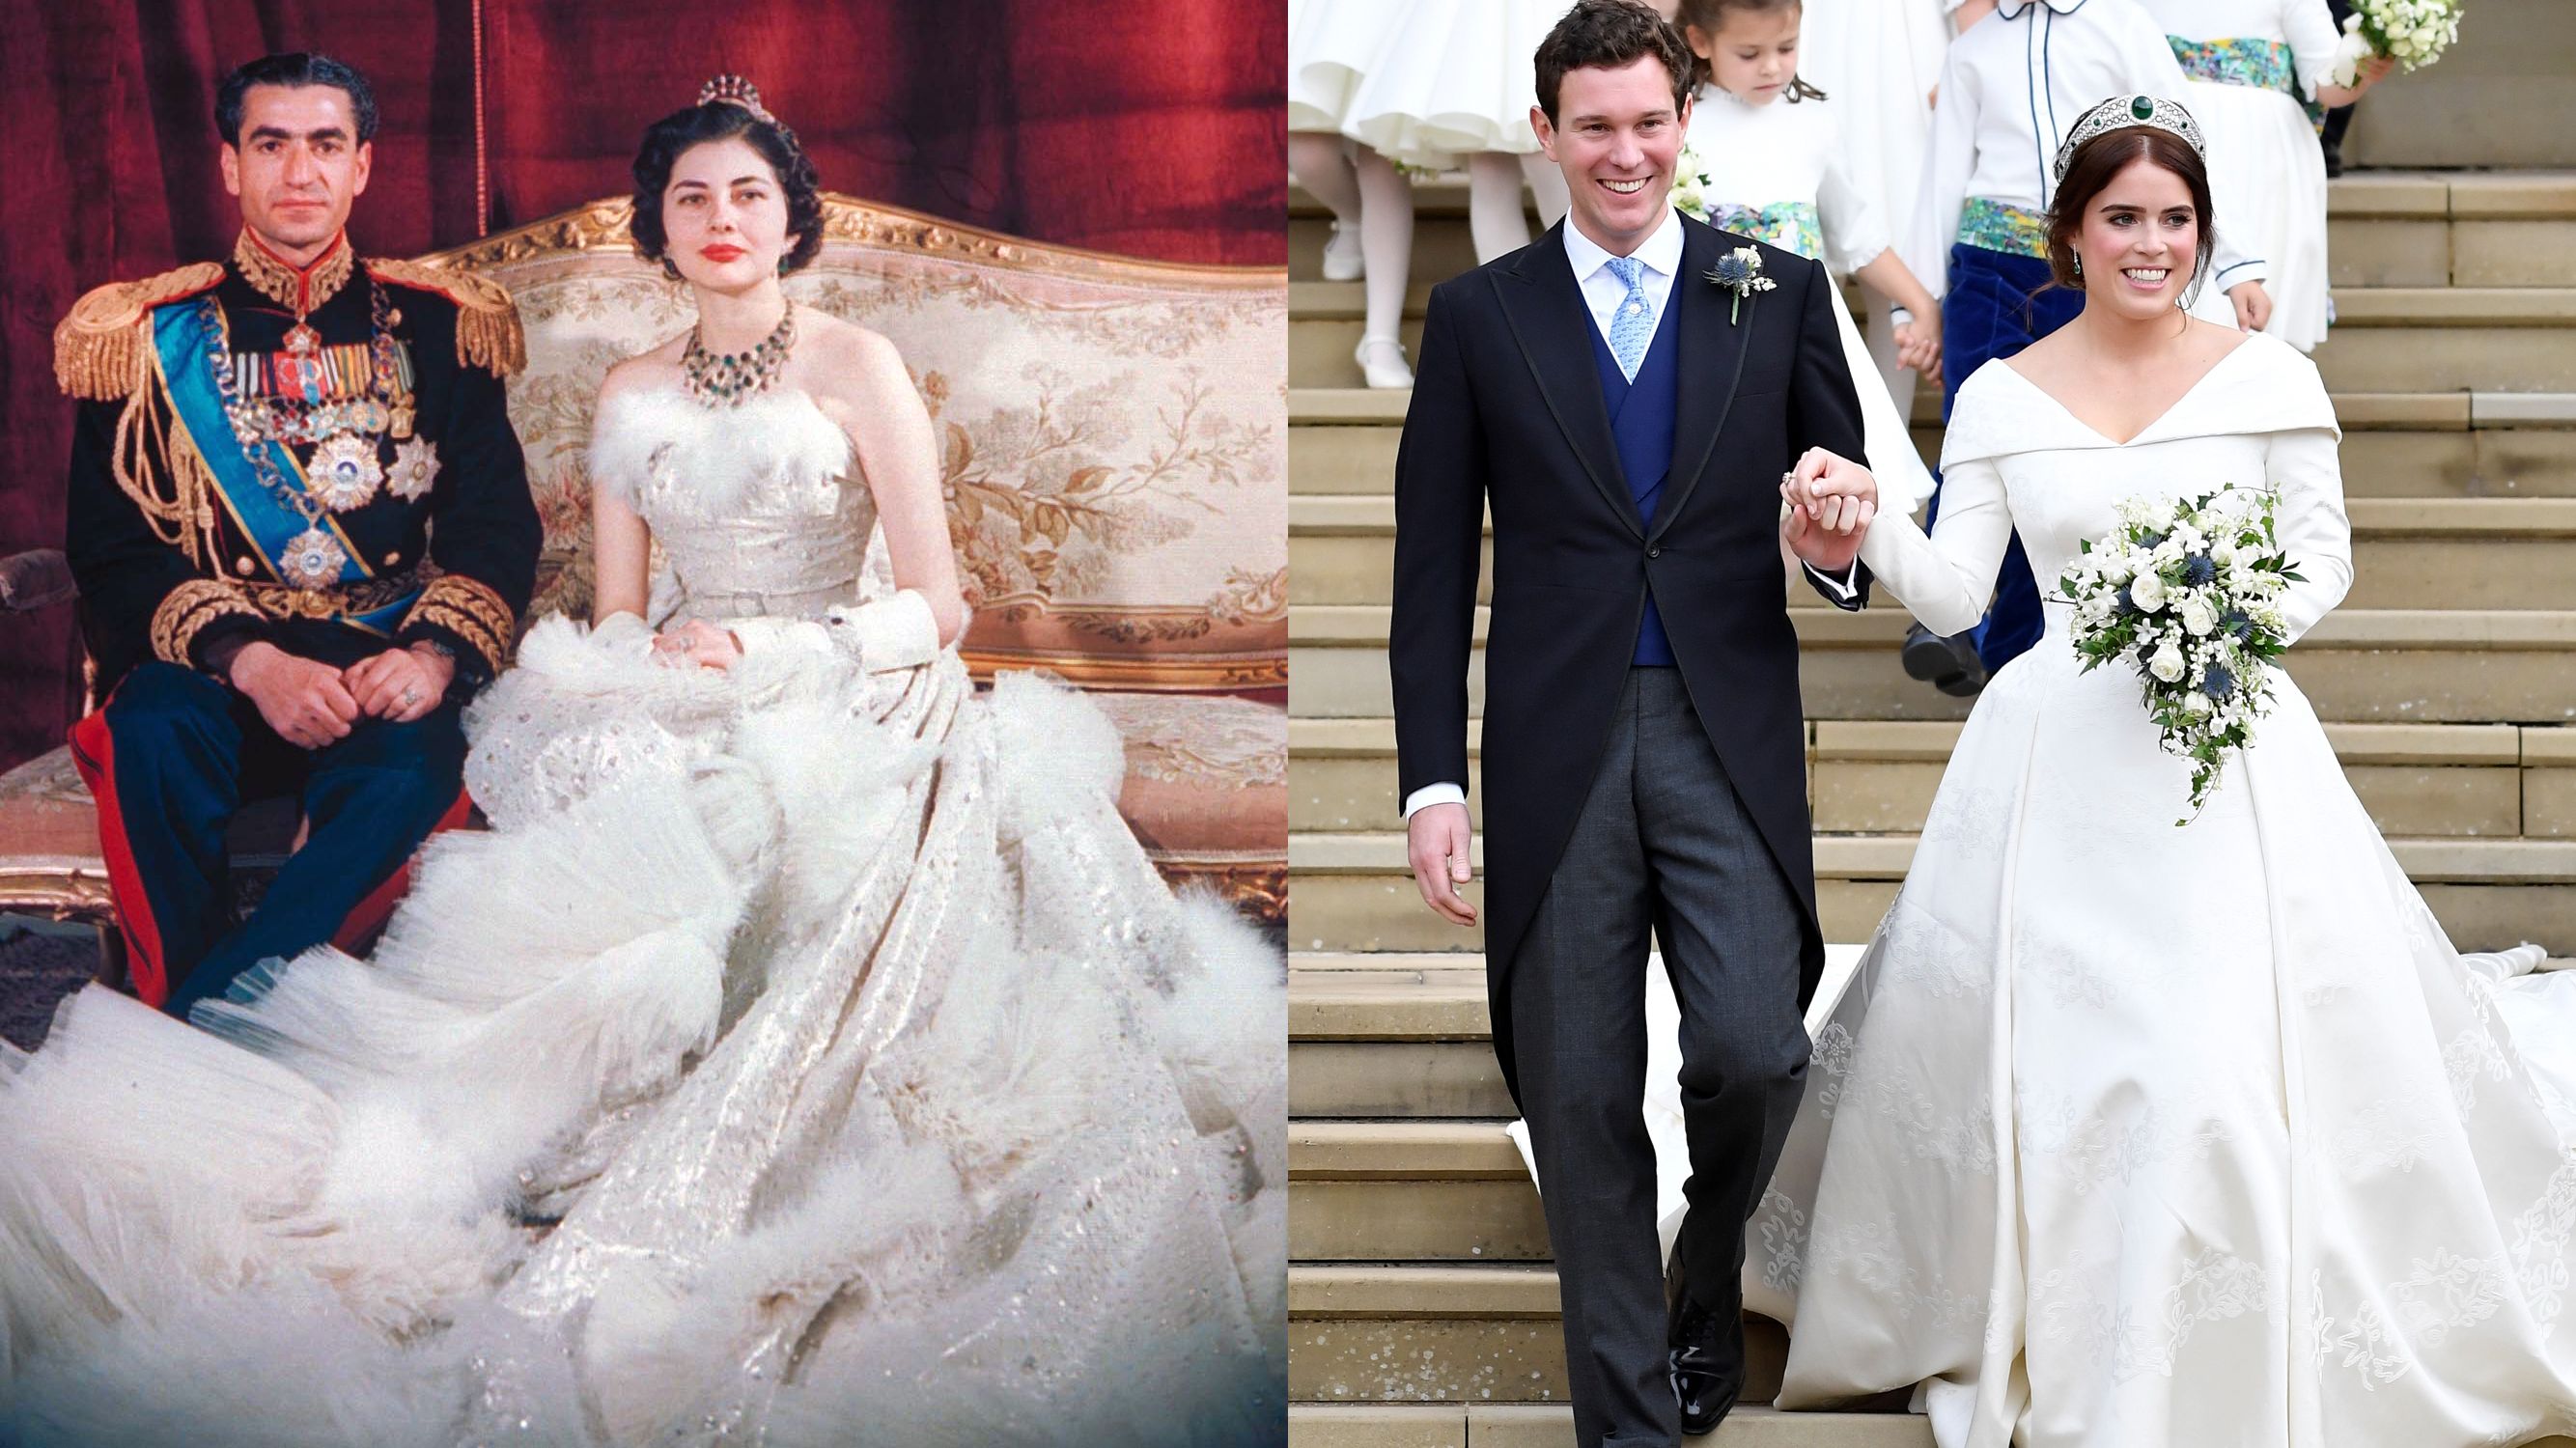 49 Iconic Royal Wedding Dresses Worn by Royal Brides